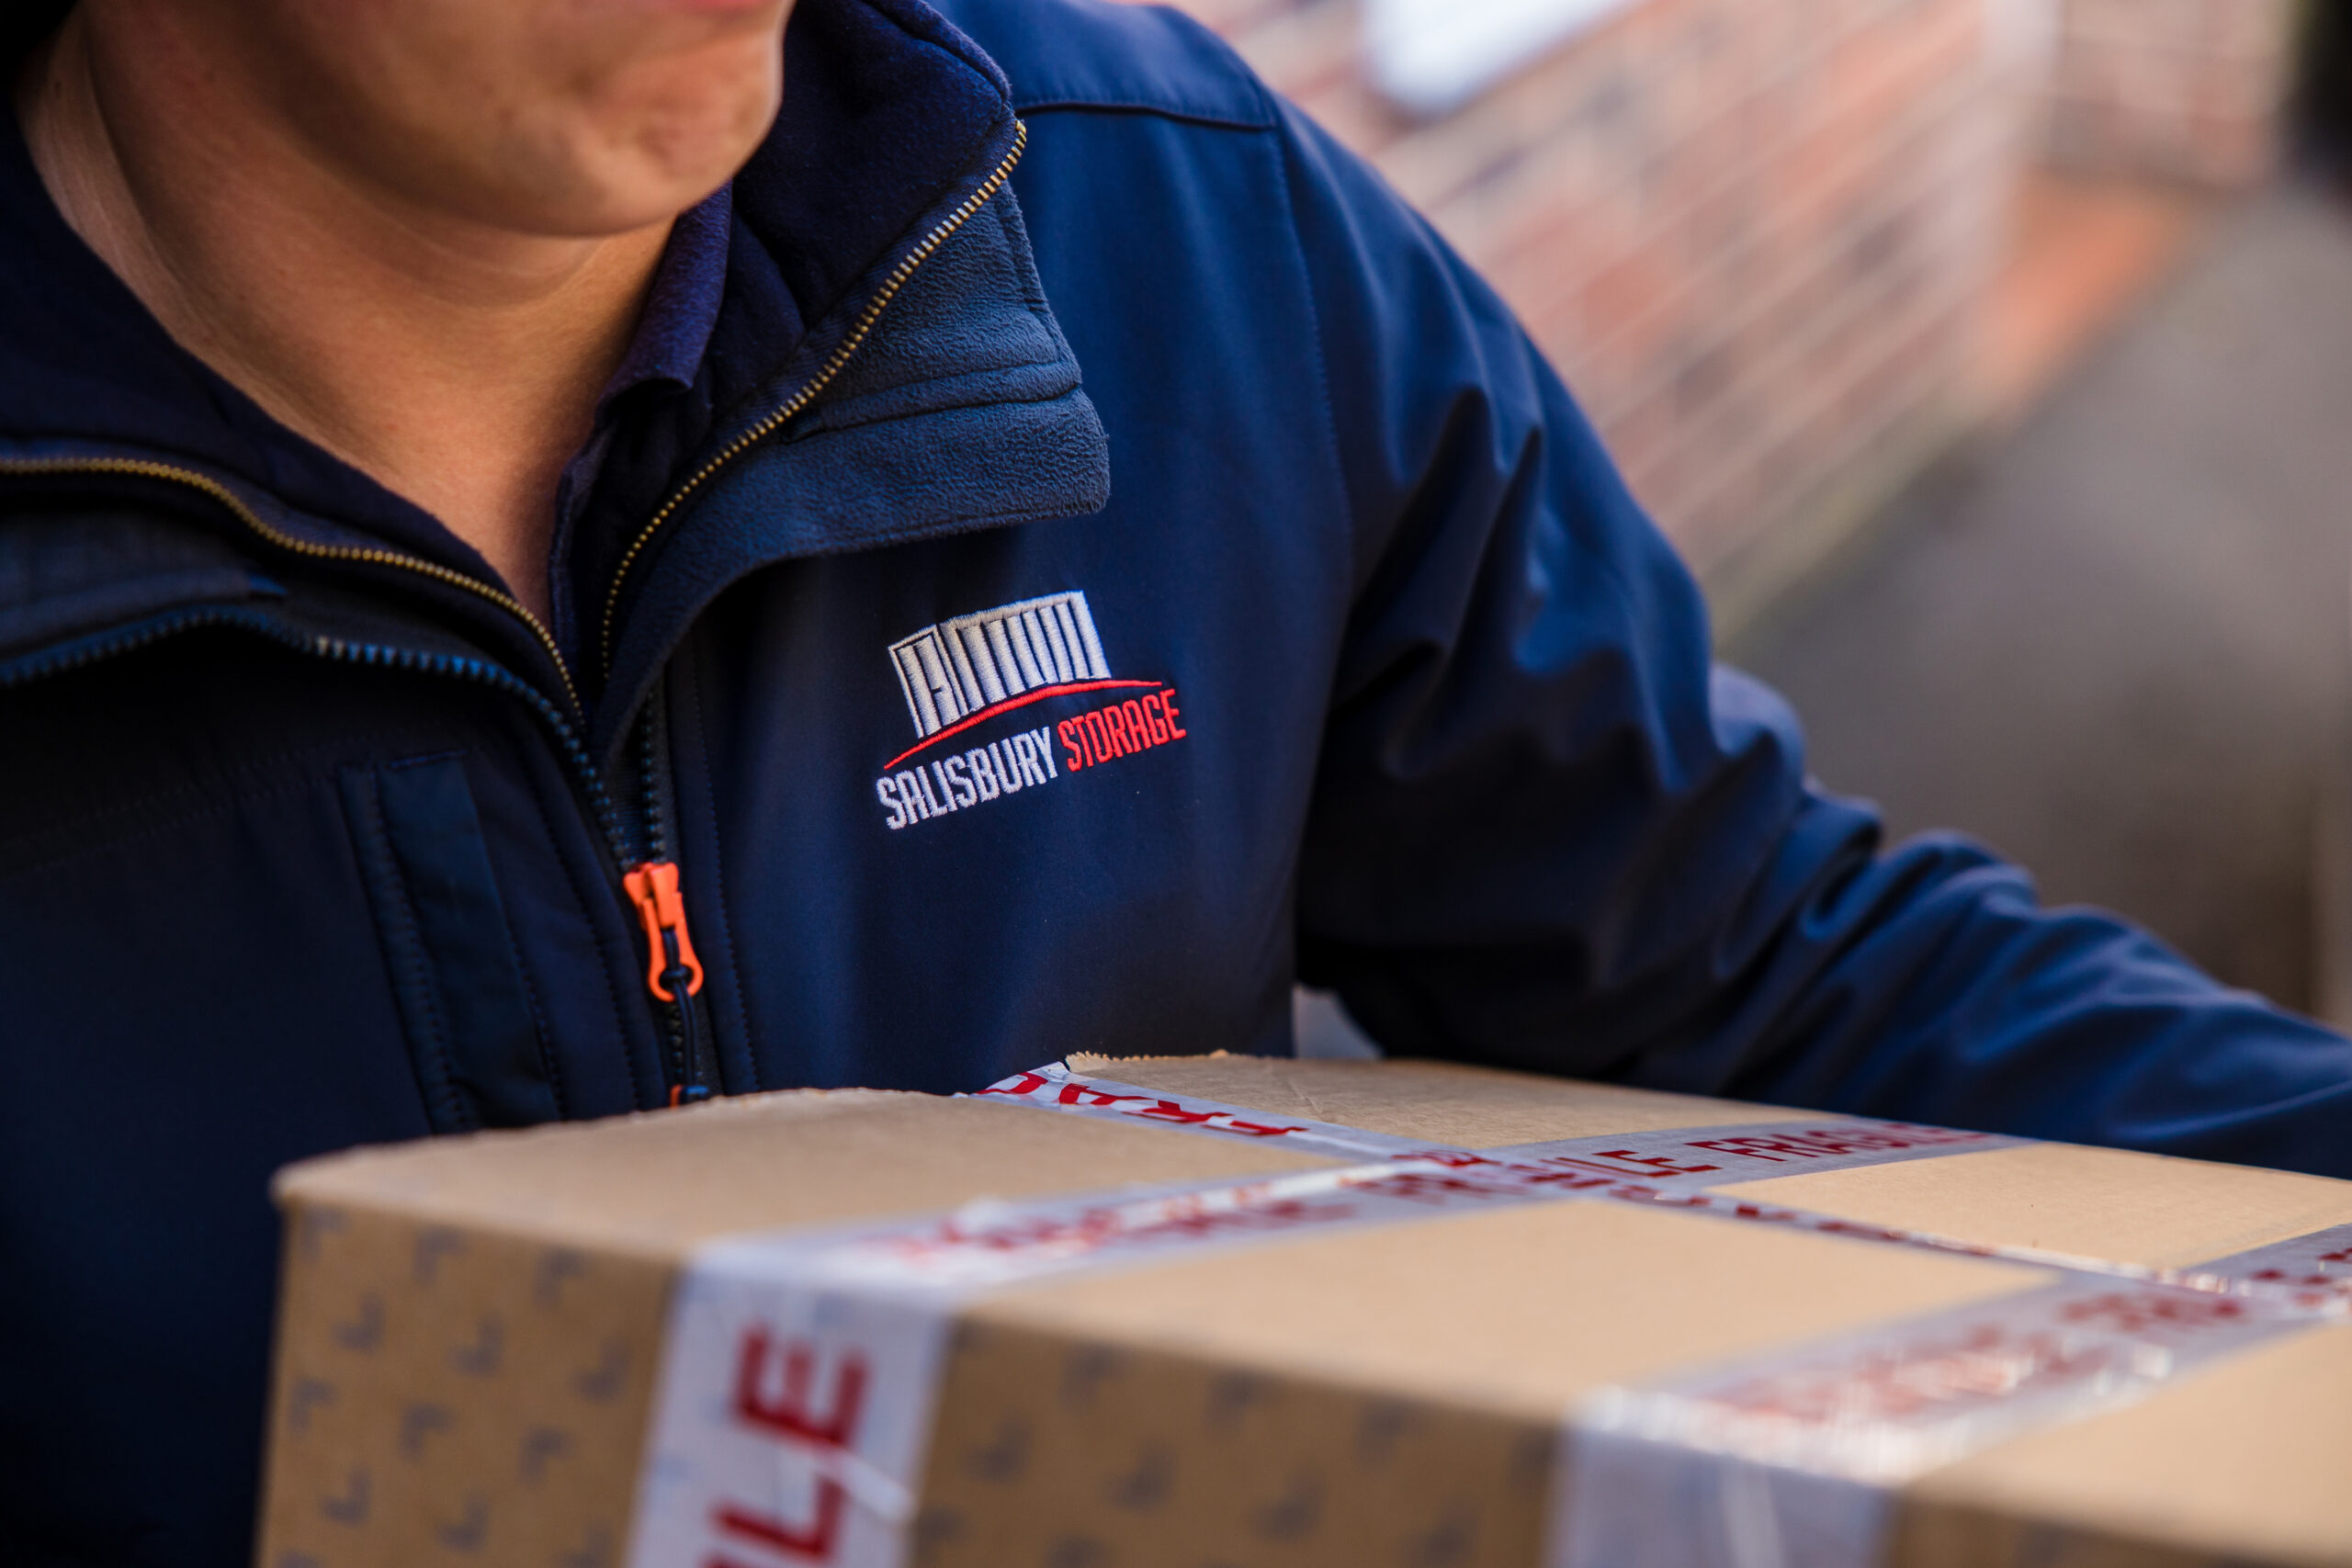 A man in a dark blue salisbury storage jacket carrying a box outside.